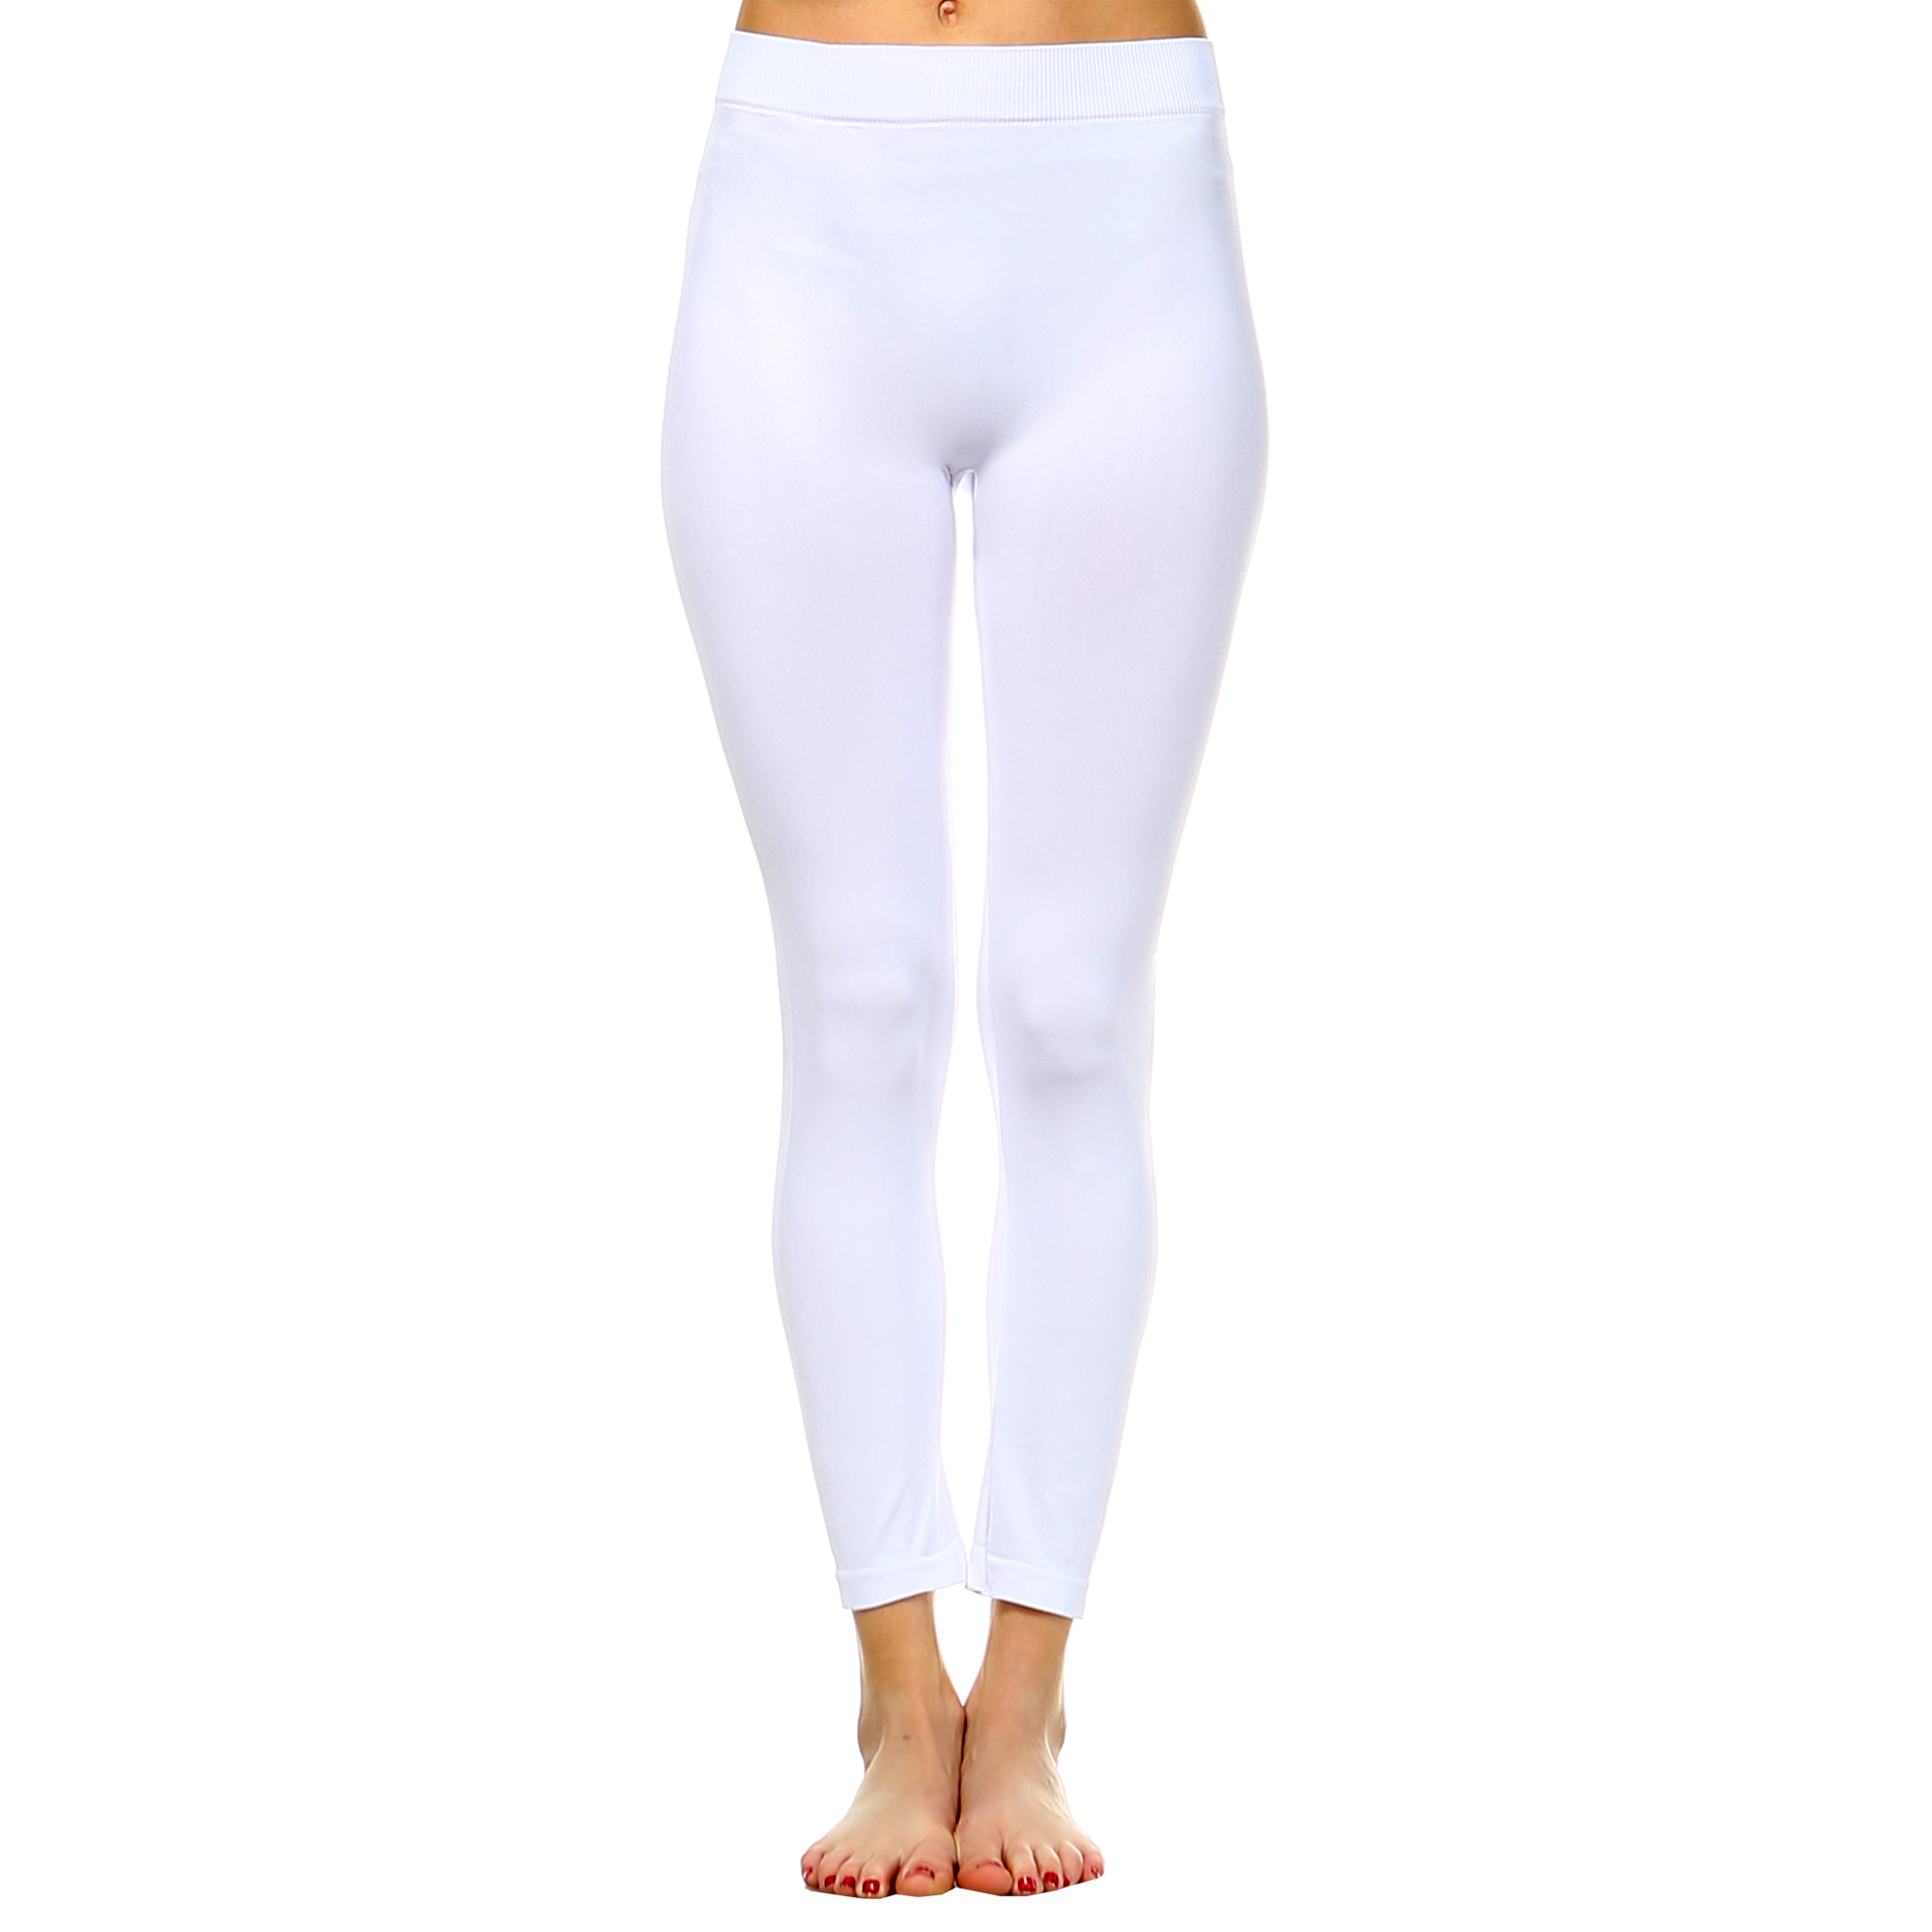 White Mark Women's Stretch Leggings - White, One Size